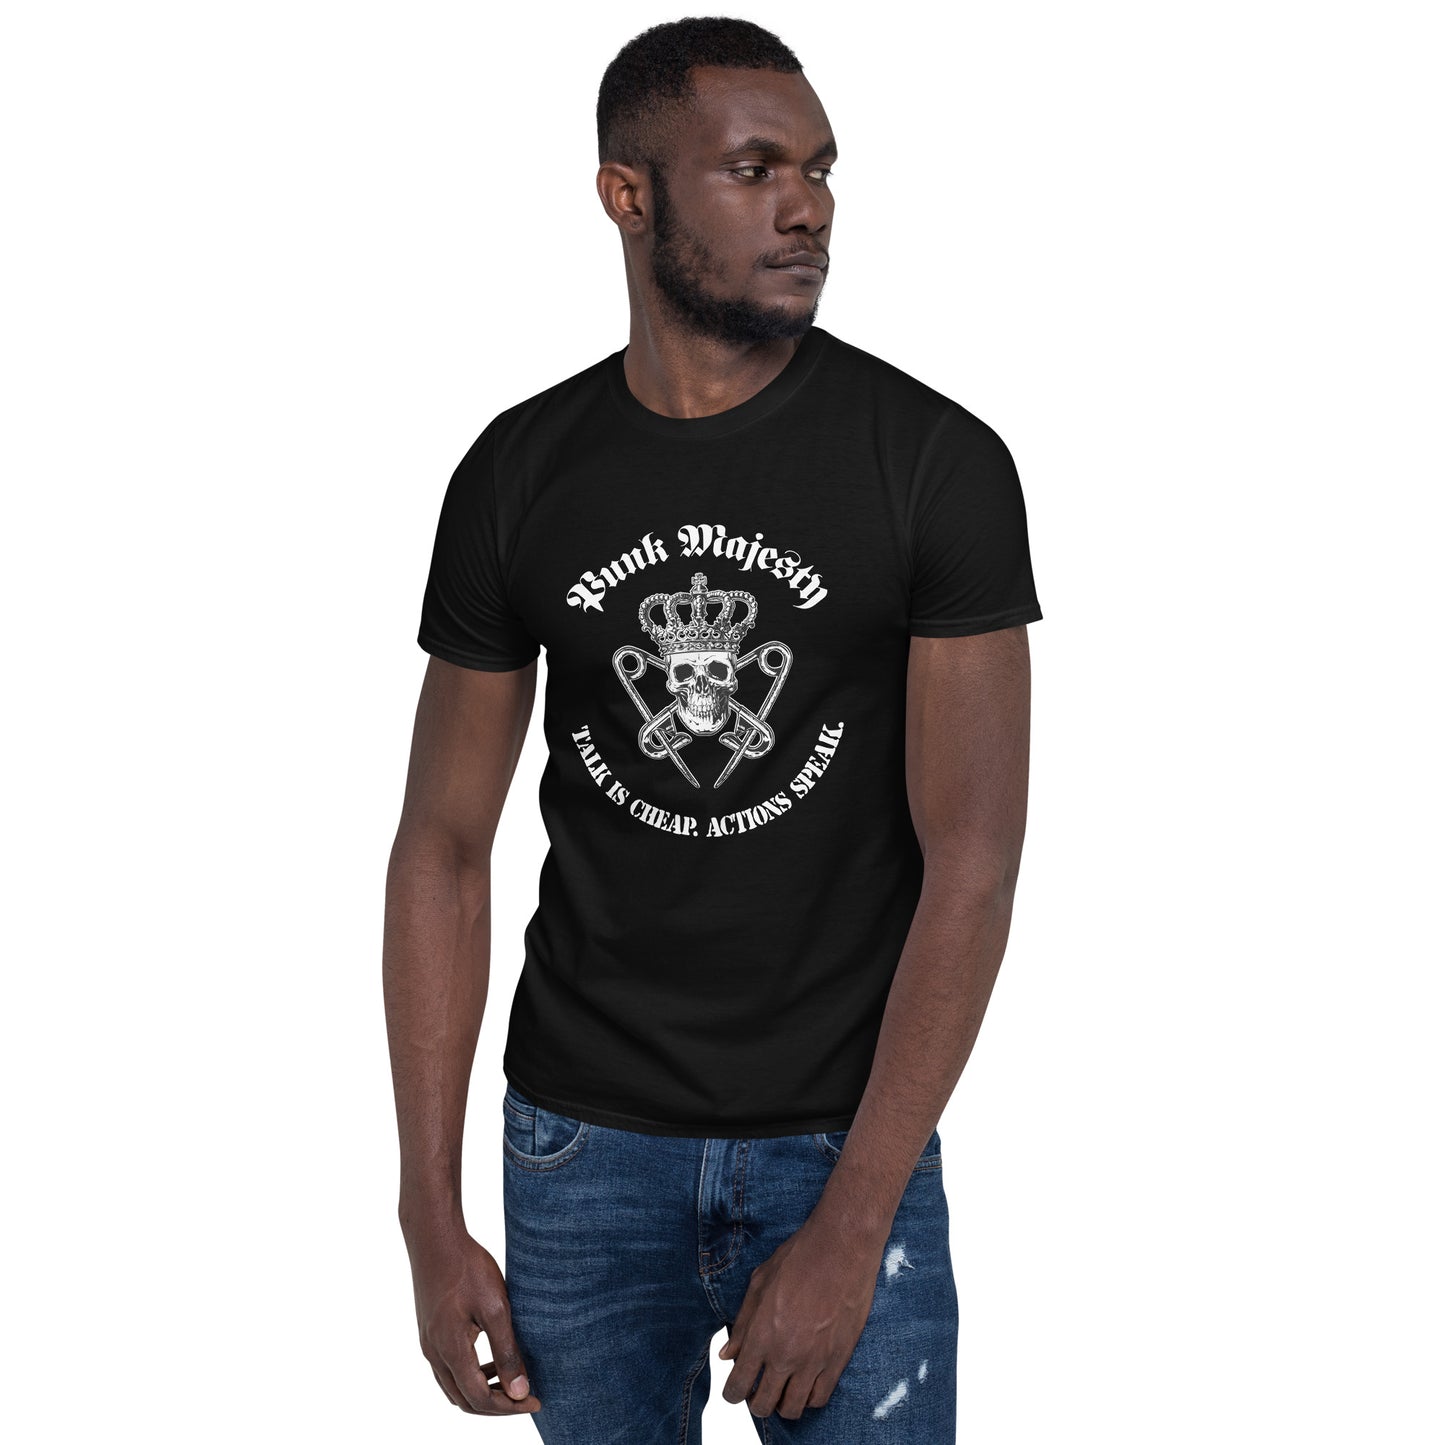 Punk Majesty XL-3XL 100% Cotton Unisex T-Shirt